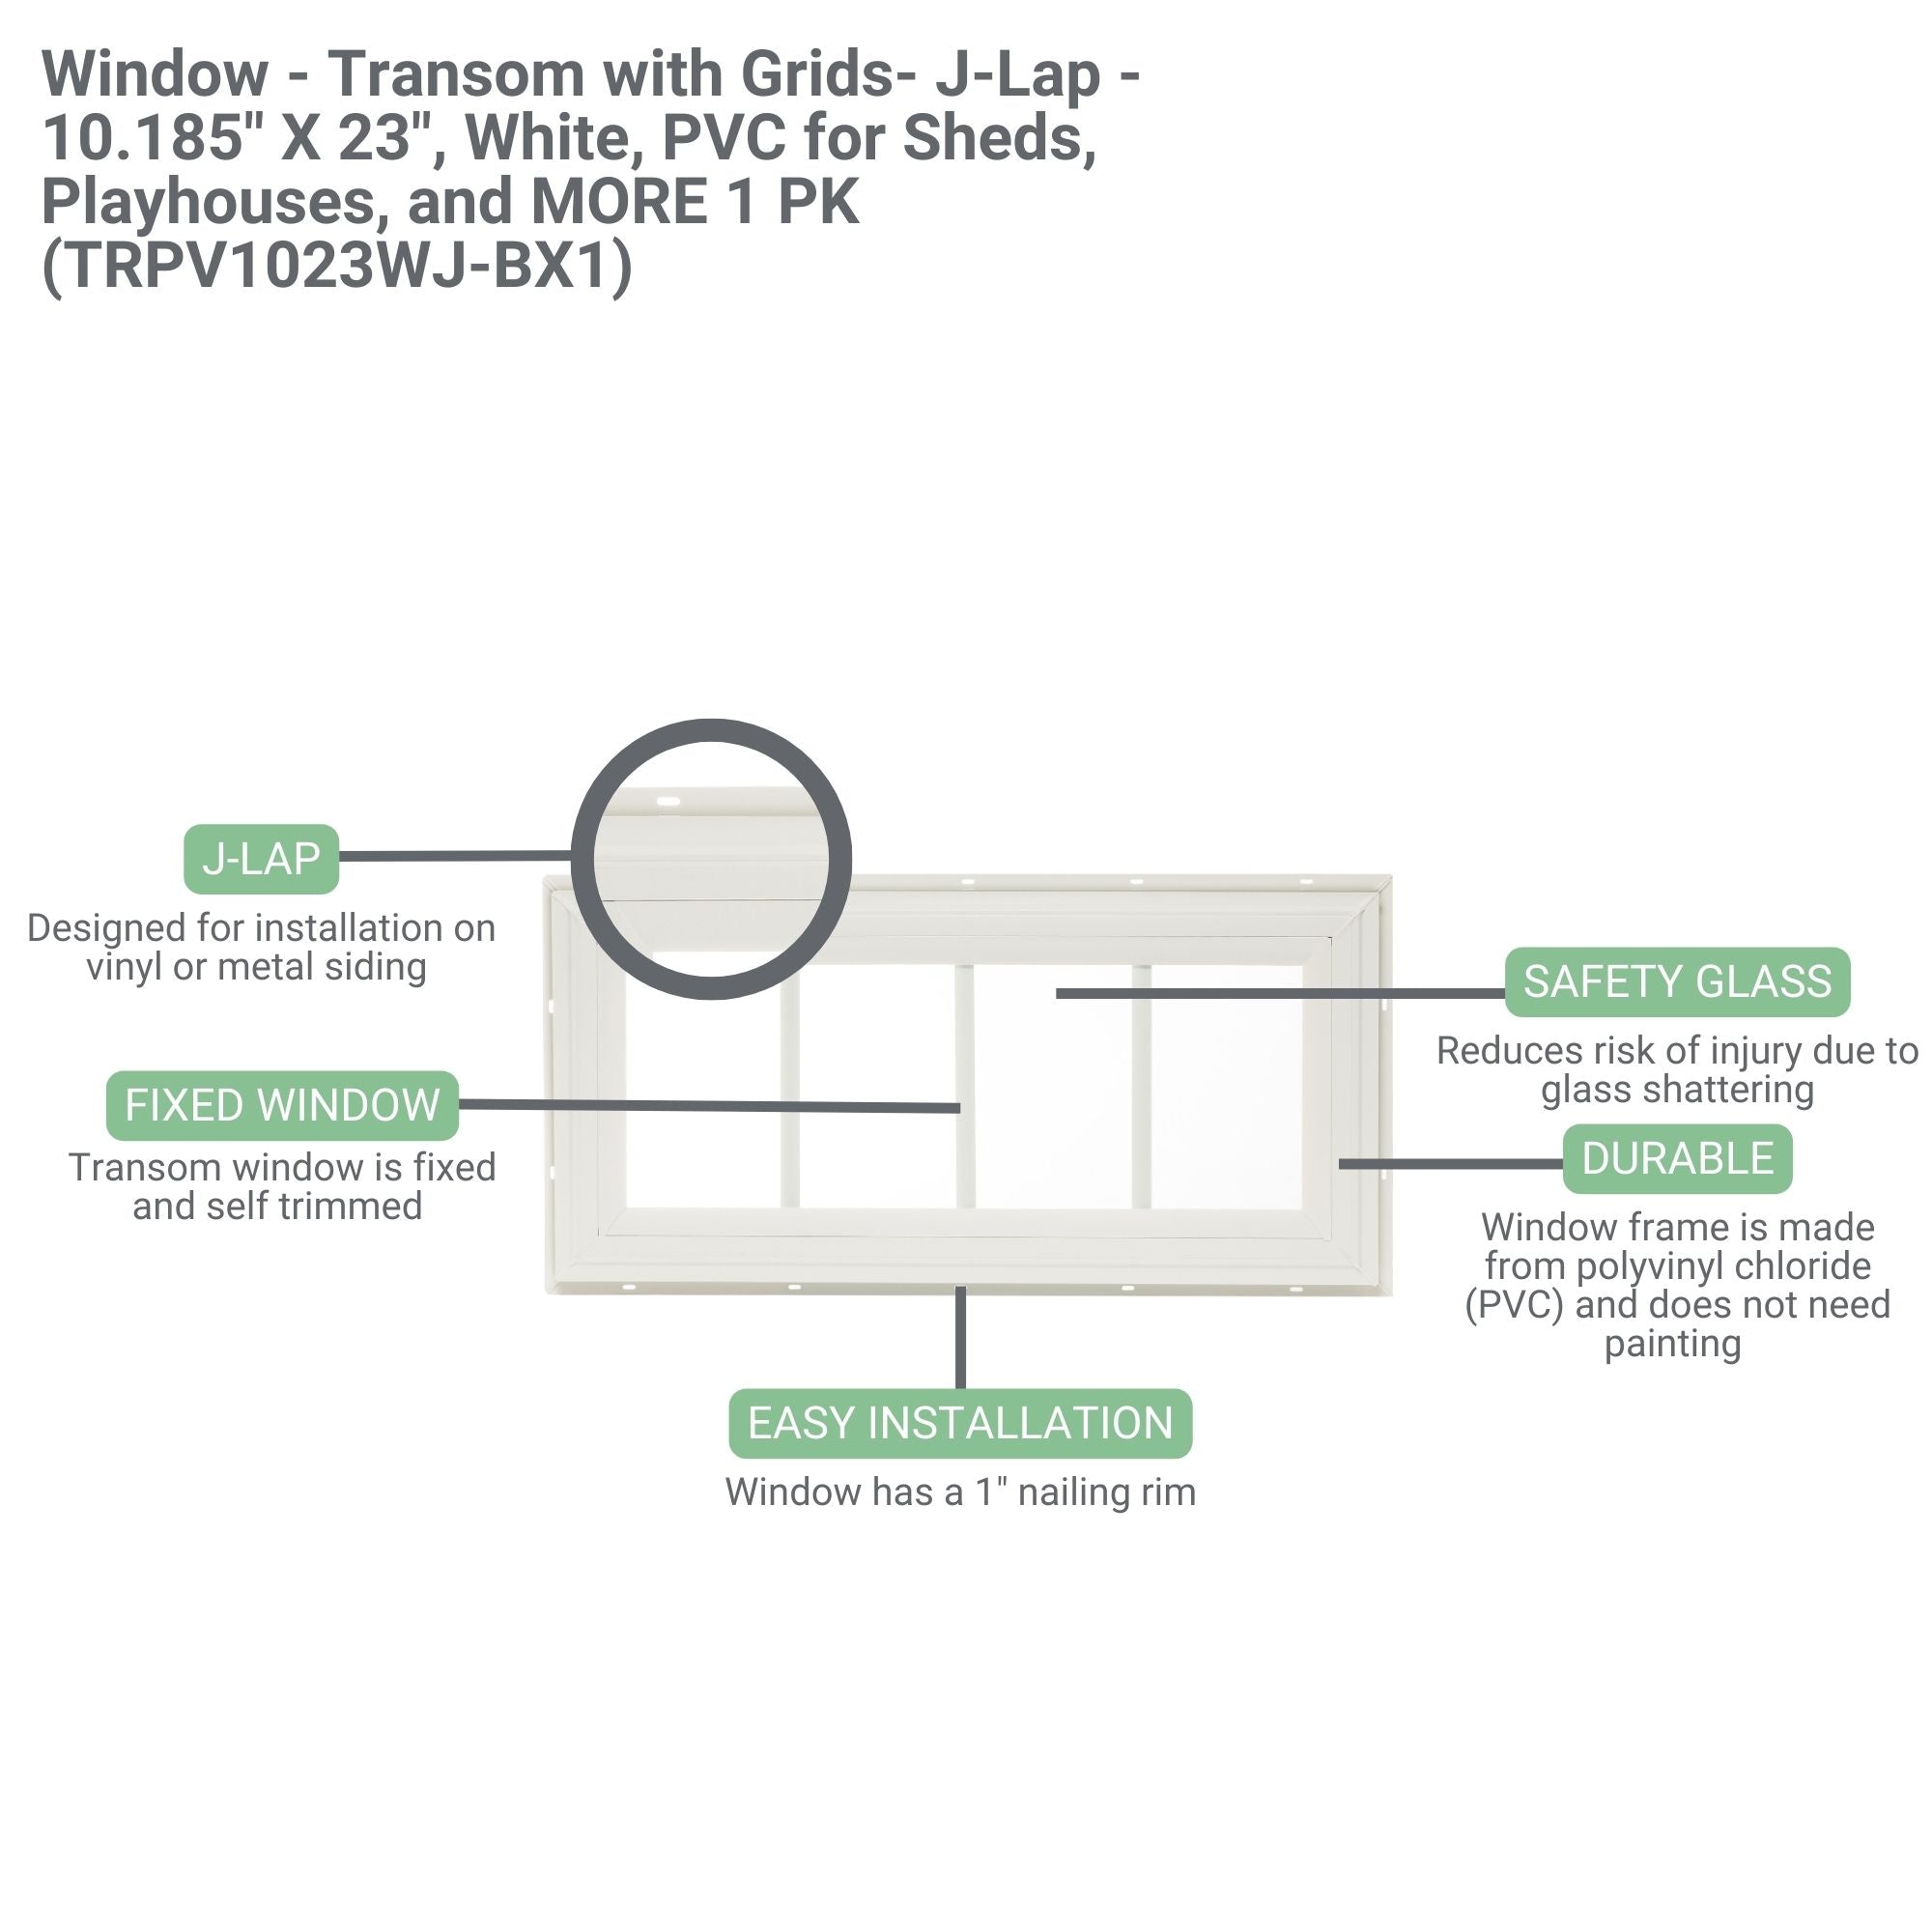 10.185" X 23" Transom J-Lap Shed Window, PVC